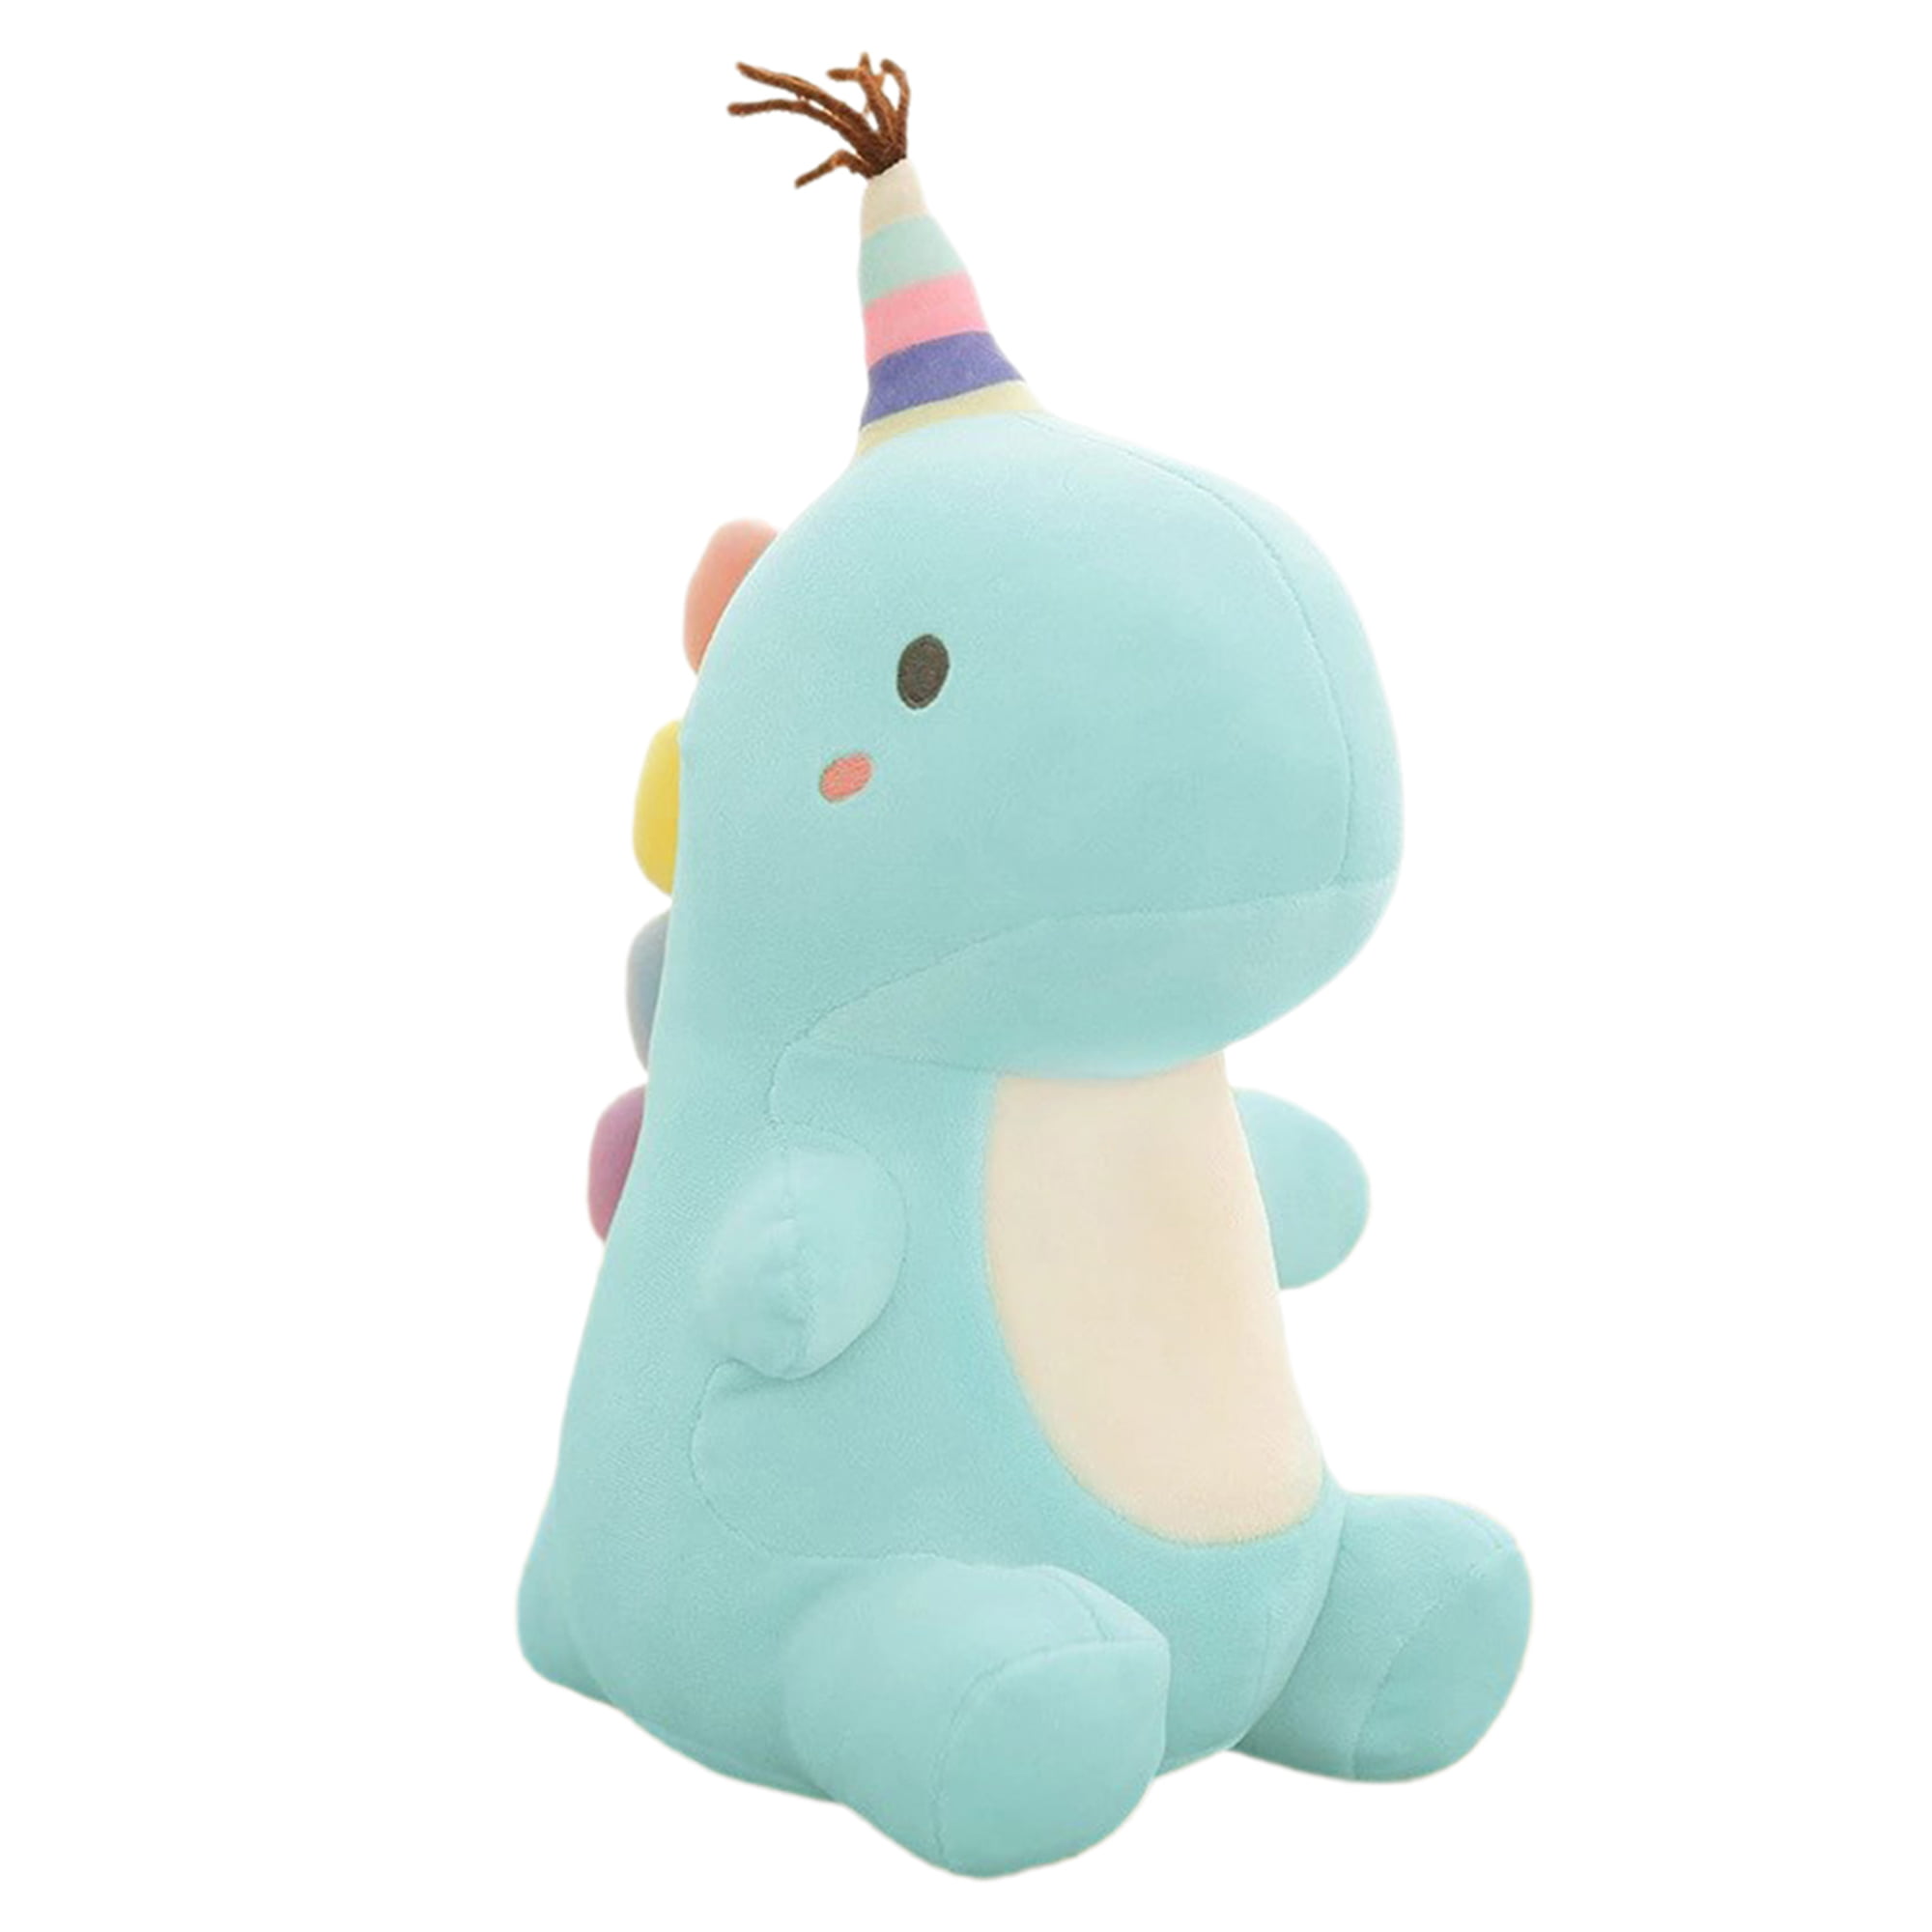 Details about   Big Size Long Cute Dinosaur Plush Toy Soft Animal Dinosaur Stuffed Pillow Kids